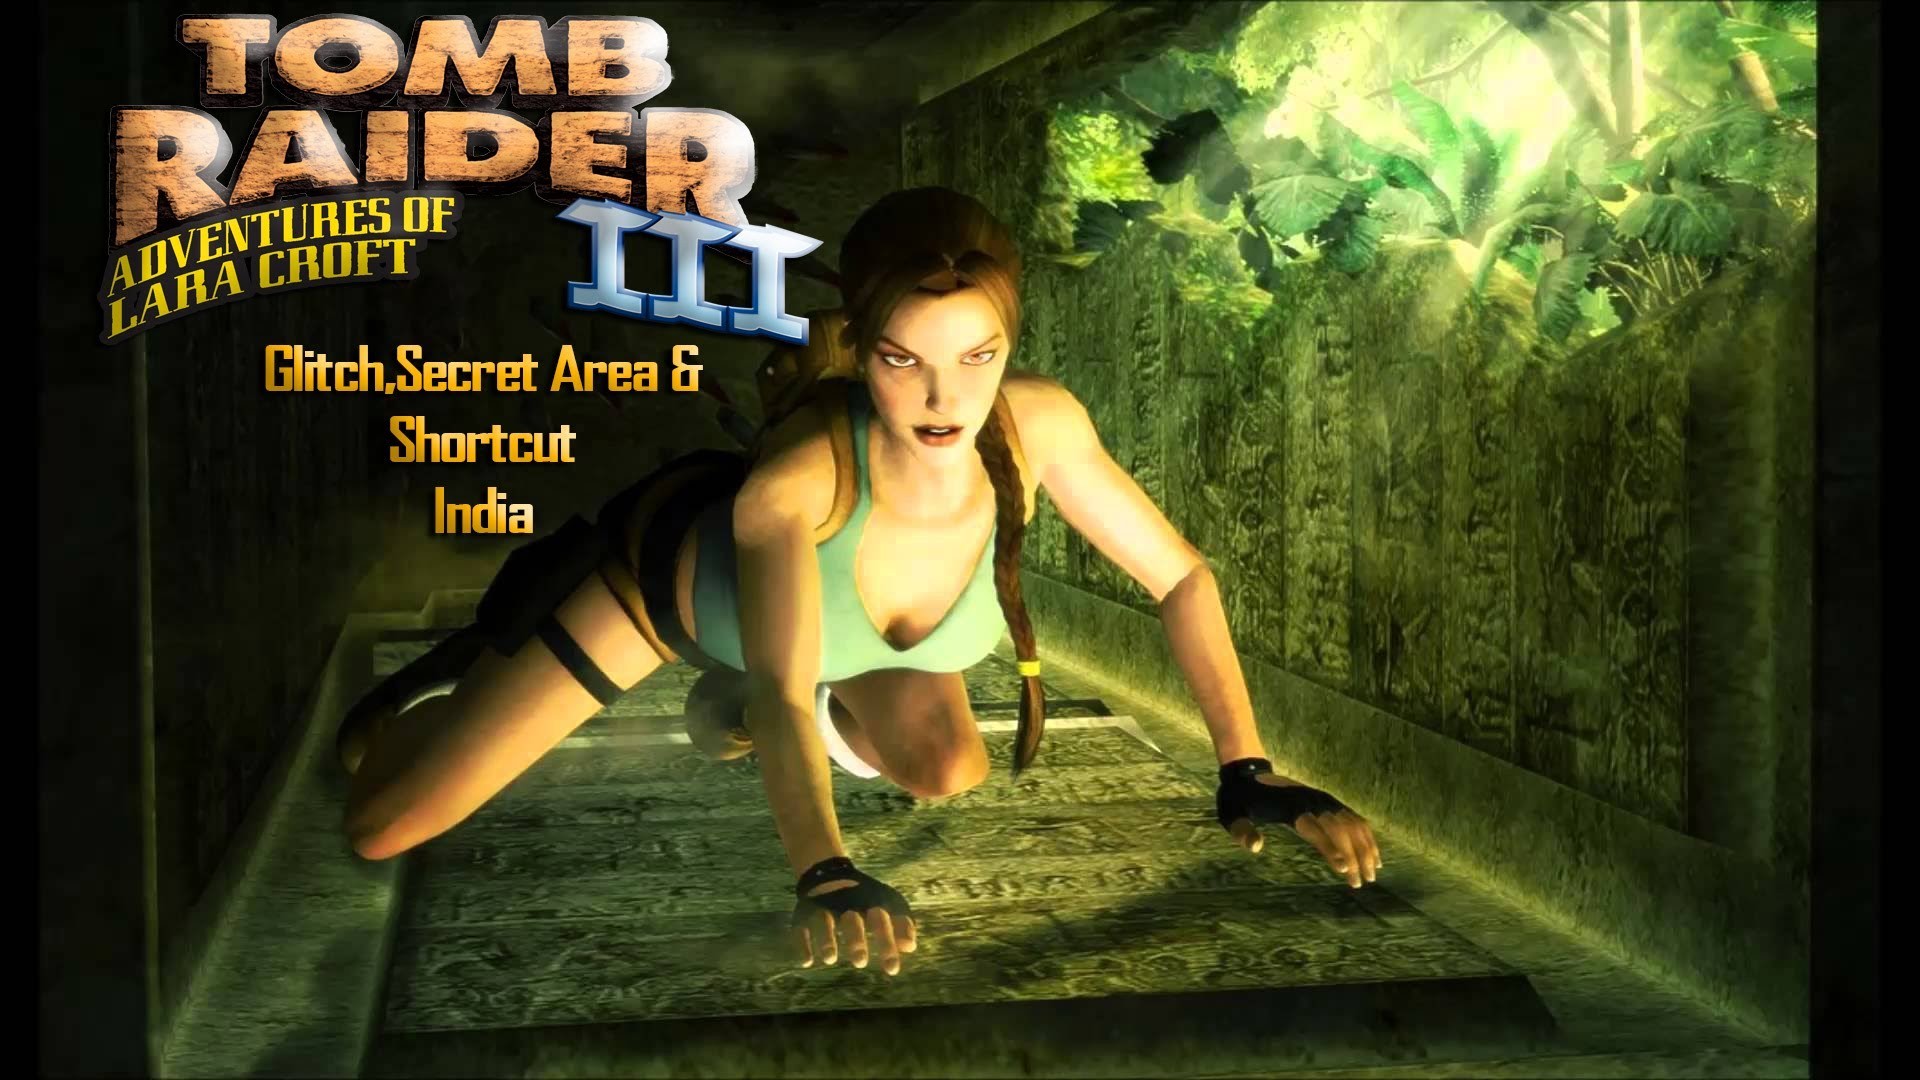 General 1920x1080 women Tomb Raider III video games PC gaming video game art video game girls video game characters Lara Croft (Tomb Raider) adventurers